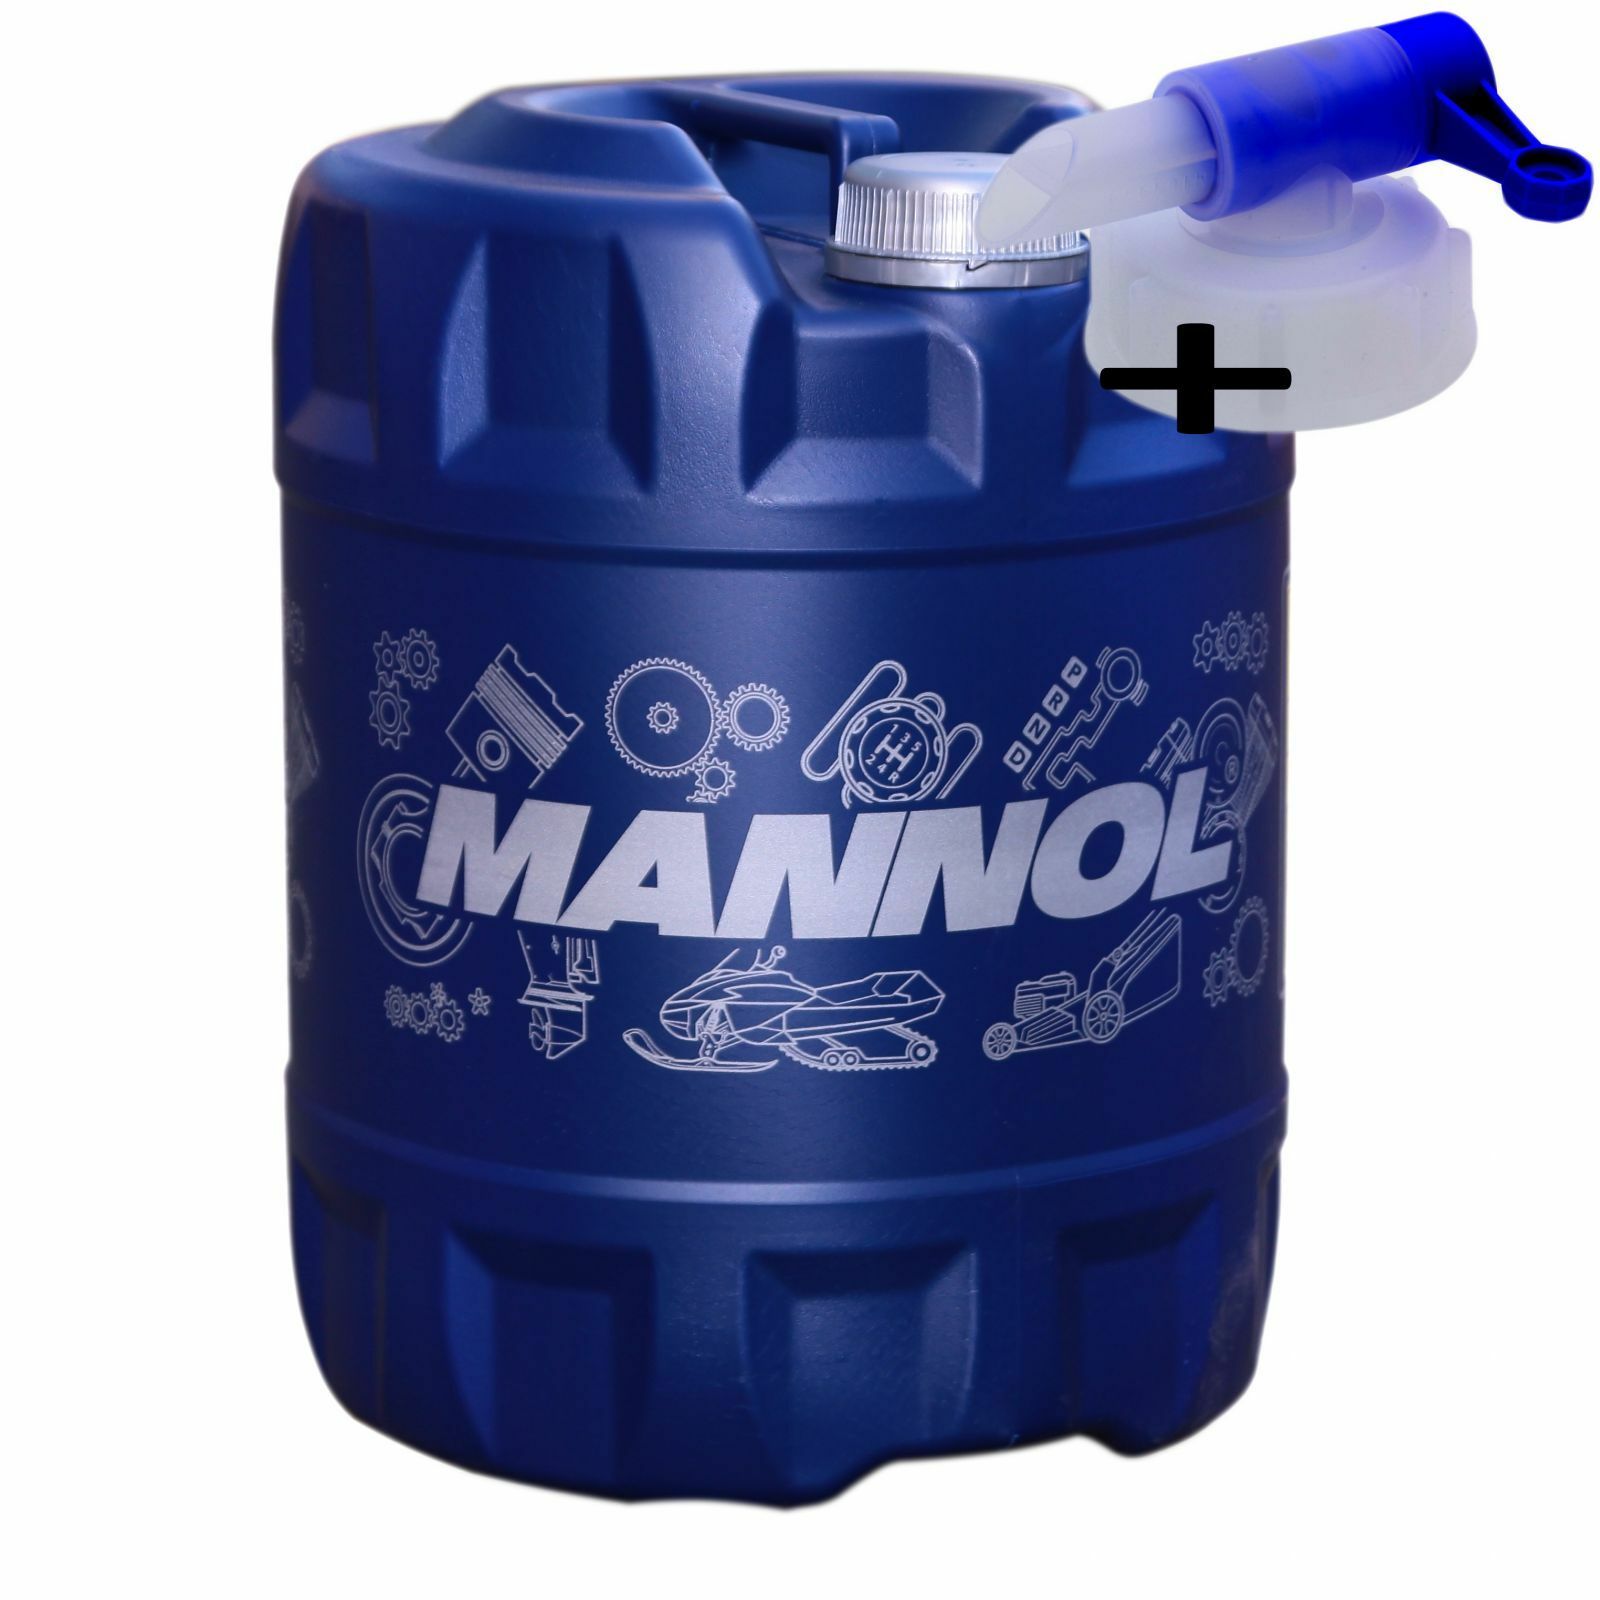 20 Liter MANNOL Hydro ISO 46 + Ablasshahn DENISON HF-2 HF-0 AFNOR 48600 ASLE